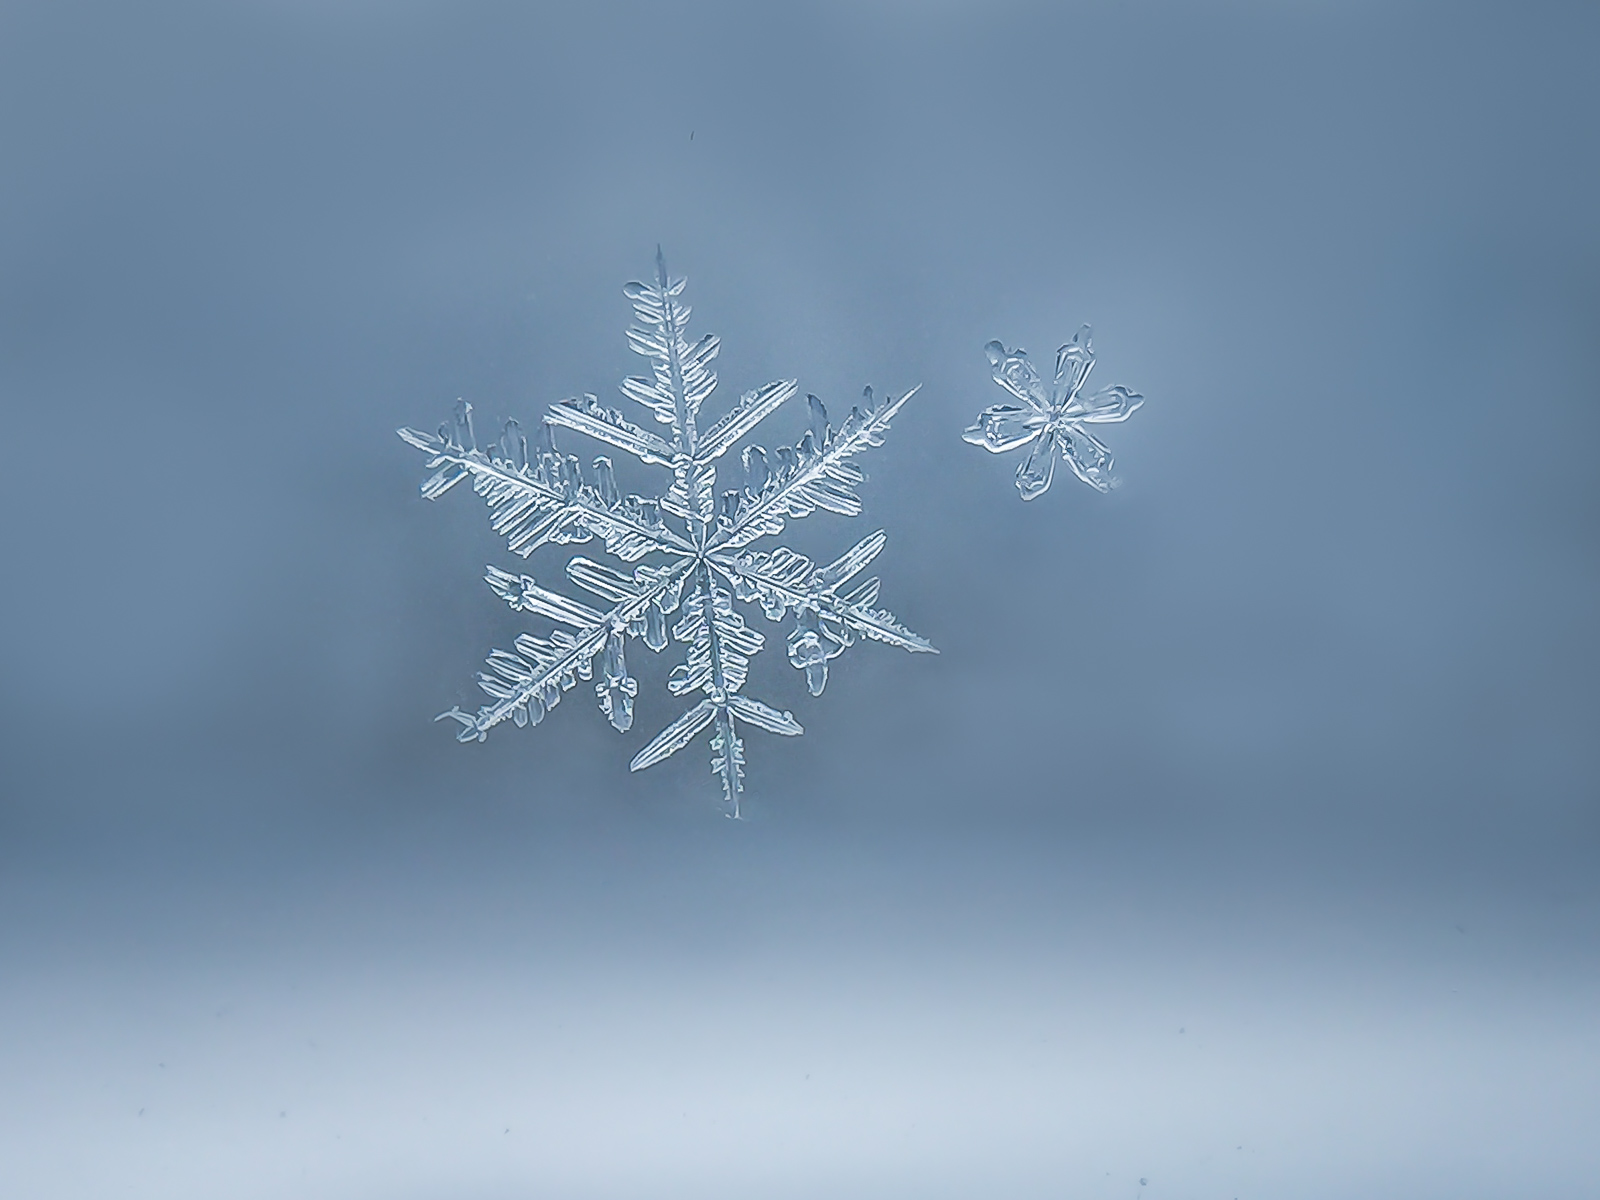 How-to-take-macro-photos-of-snowflakes-by-Karen-Schanely-6.jpg